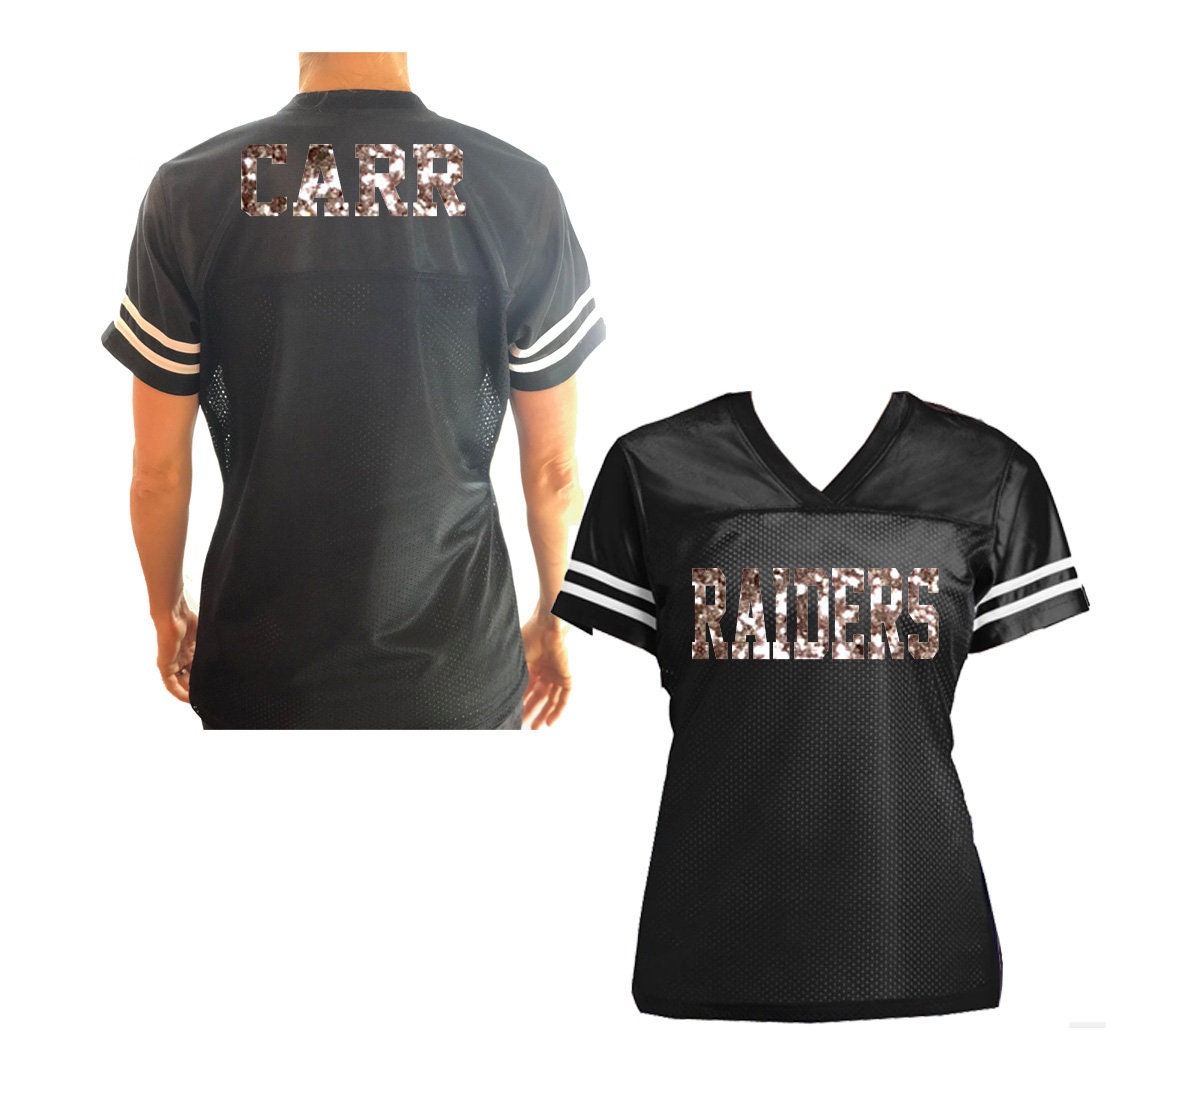 ladies raiders jersey